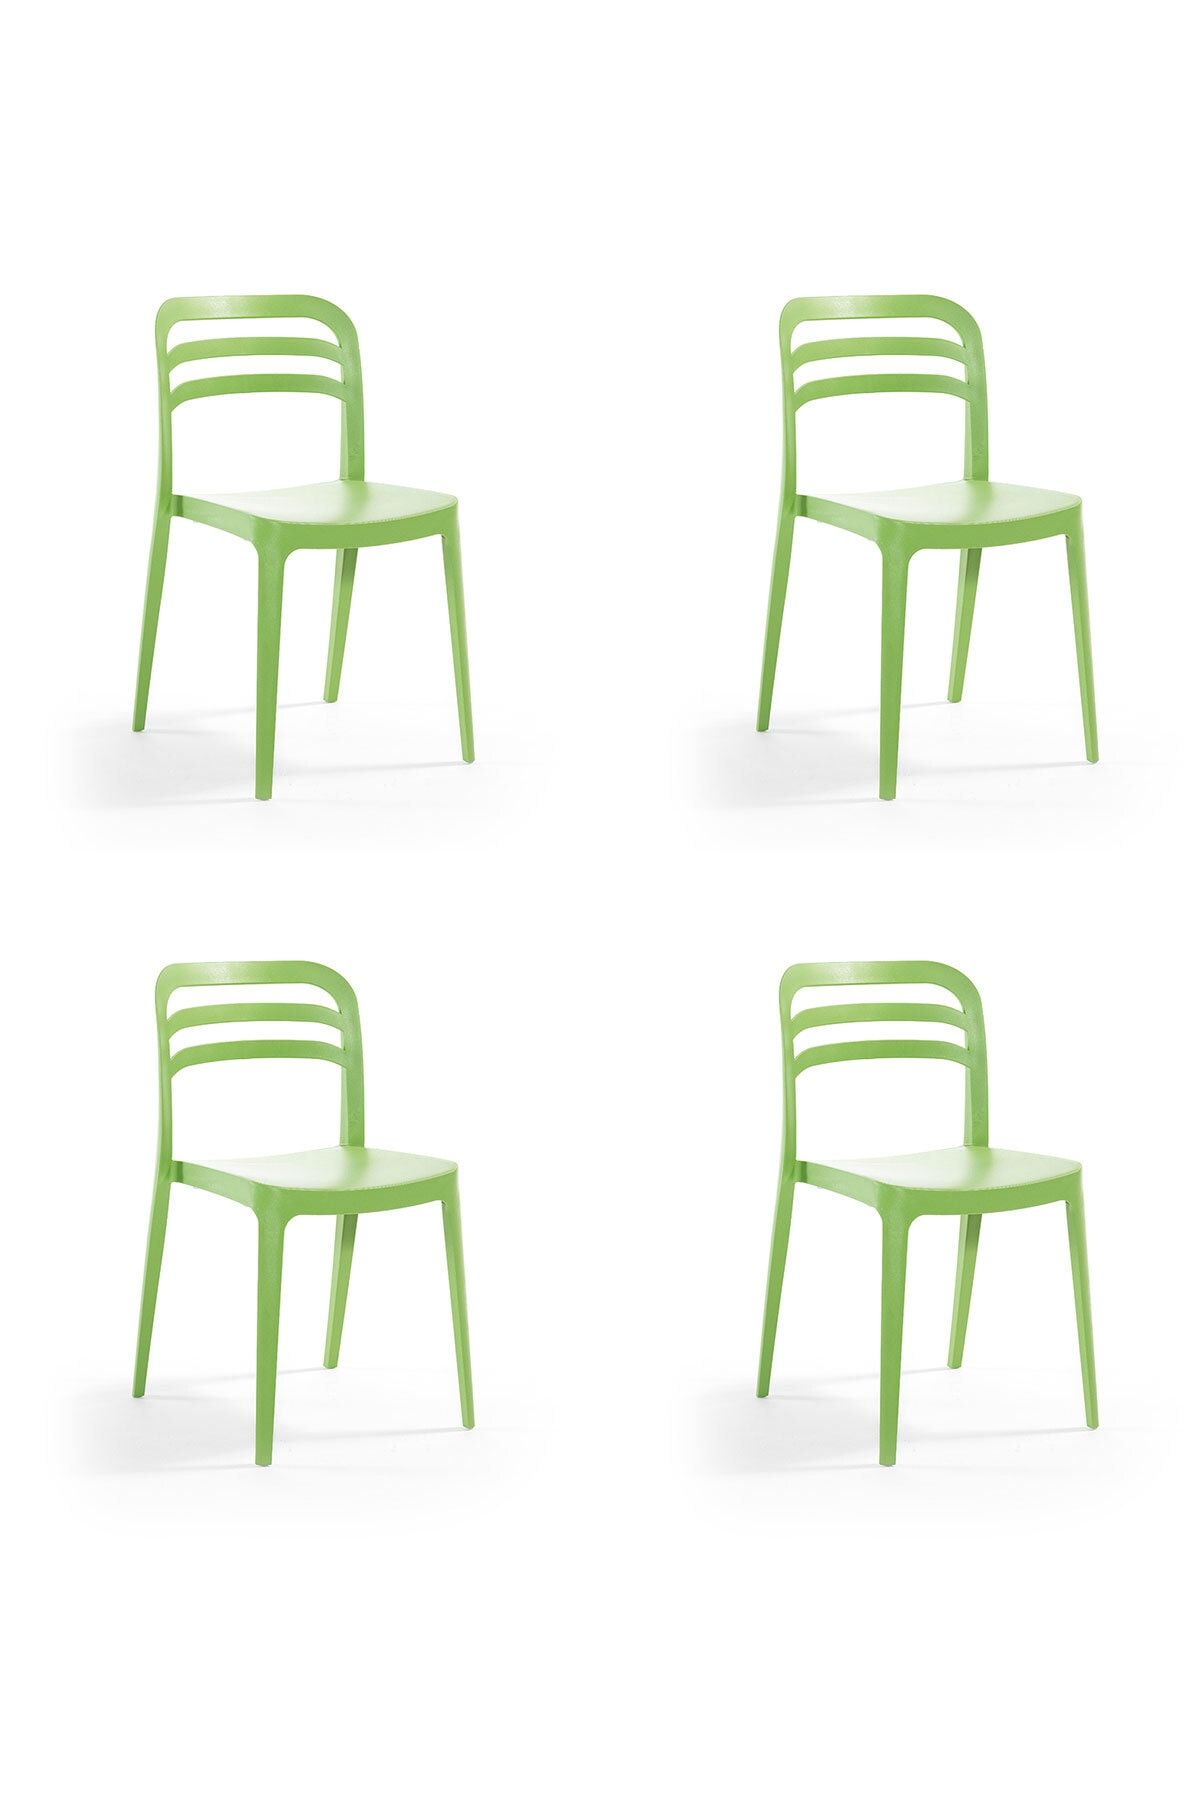 Alezy Aspen Bahçe Balkon Renkli Sandalye Yeşil 4'lü Set